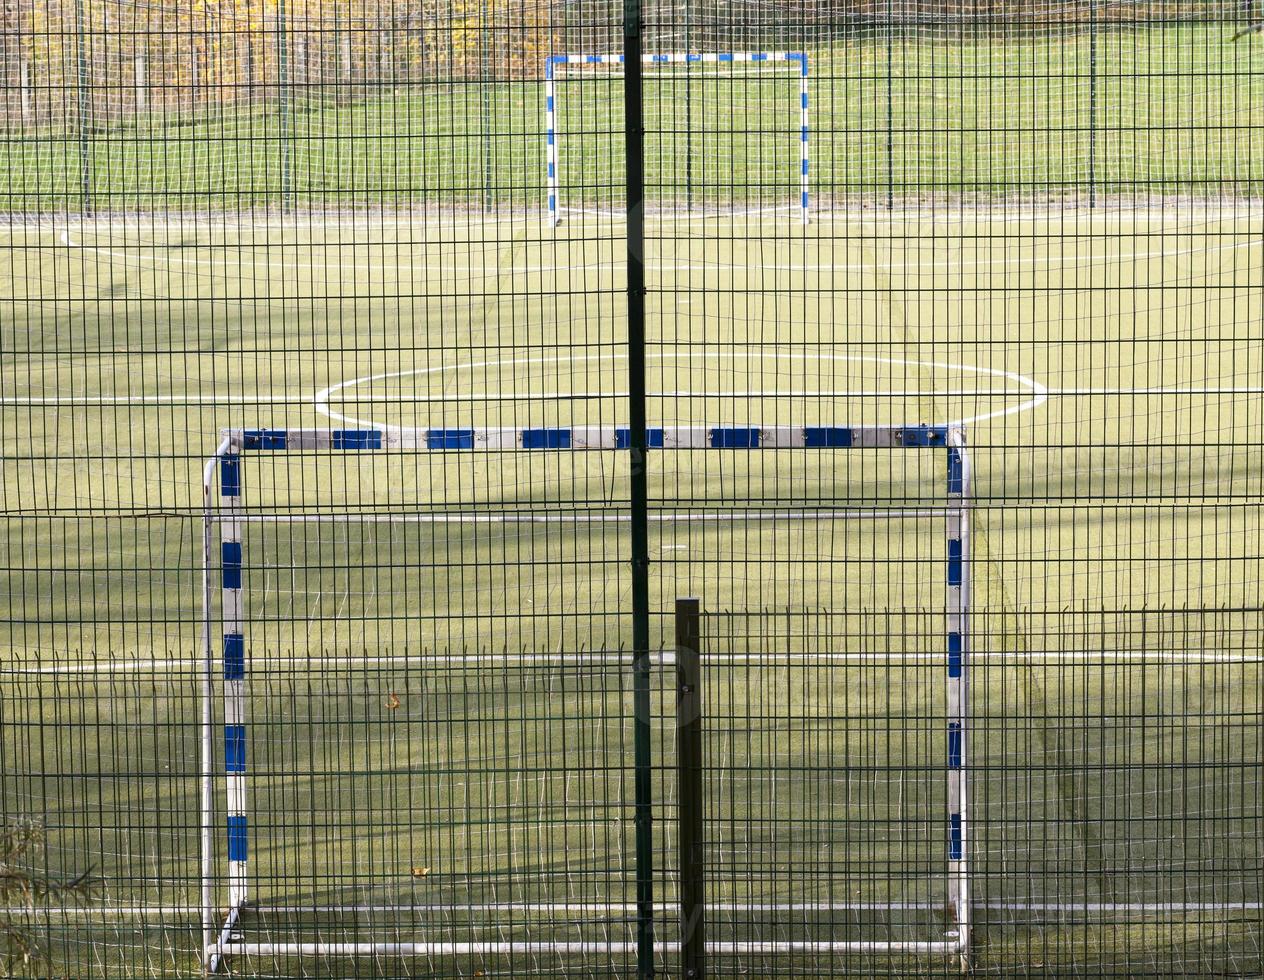 soccer gates, close up photo